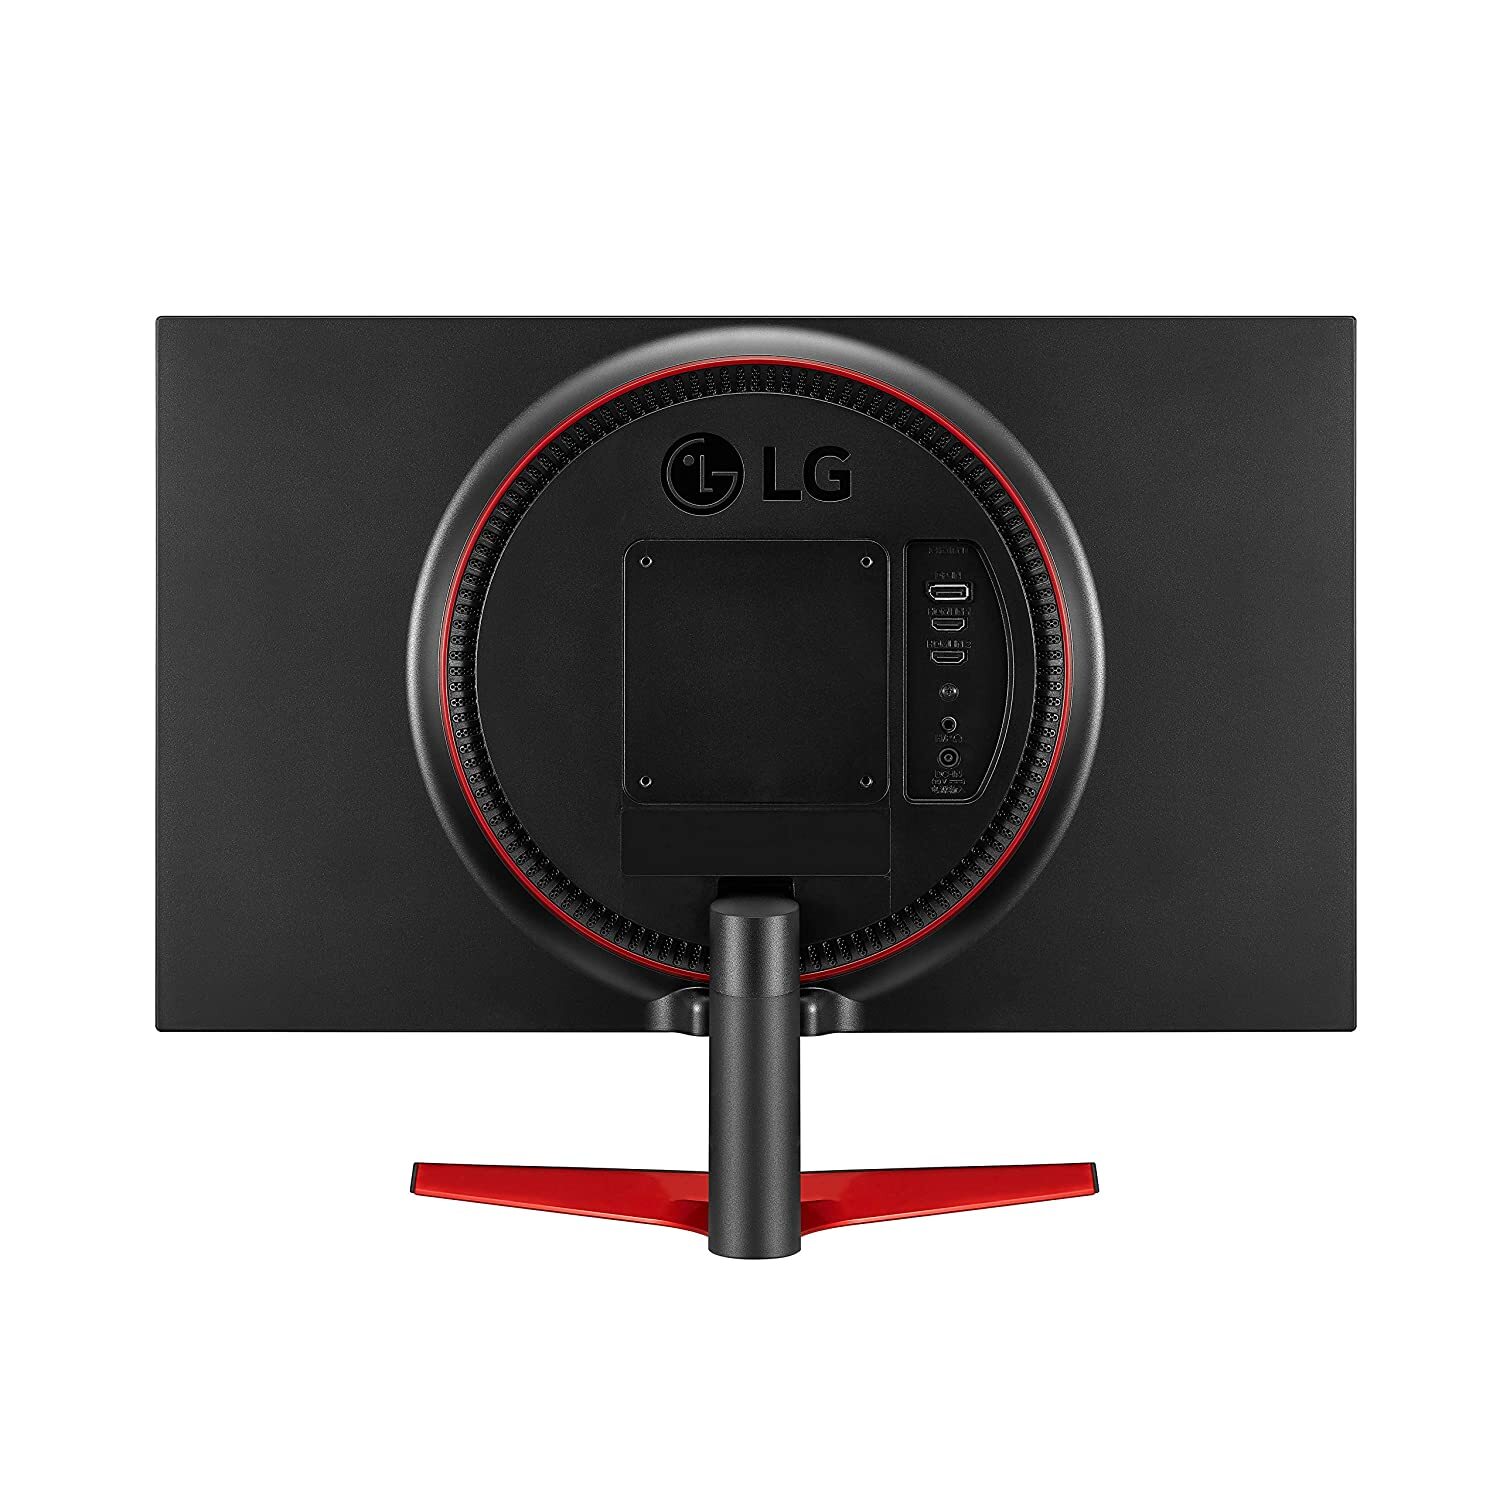 LG Ultragear 24GL600F-B 24 Inch Full HD Gaming Monitor with Radeon FreeSync Technology, 144Hz Refresh Rate, 1ms Response Time (2019) - Black